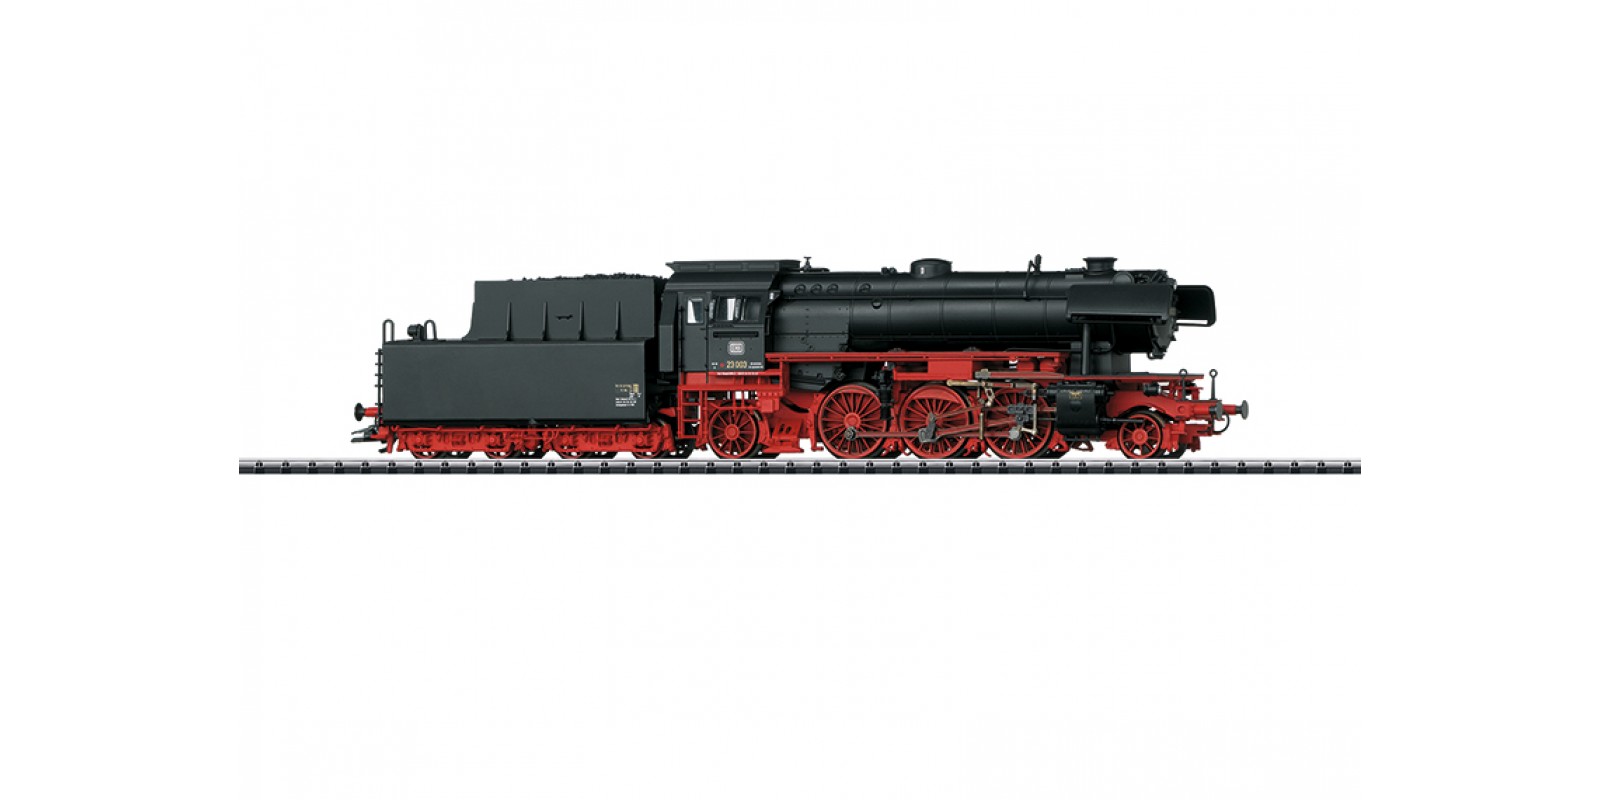 T22505 Class 23.0 Passenger Steam Locomotive with a Tender